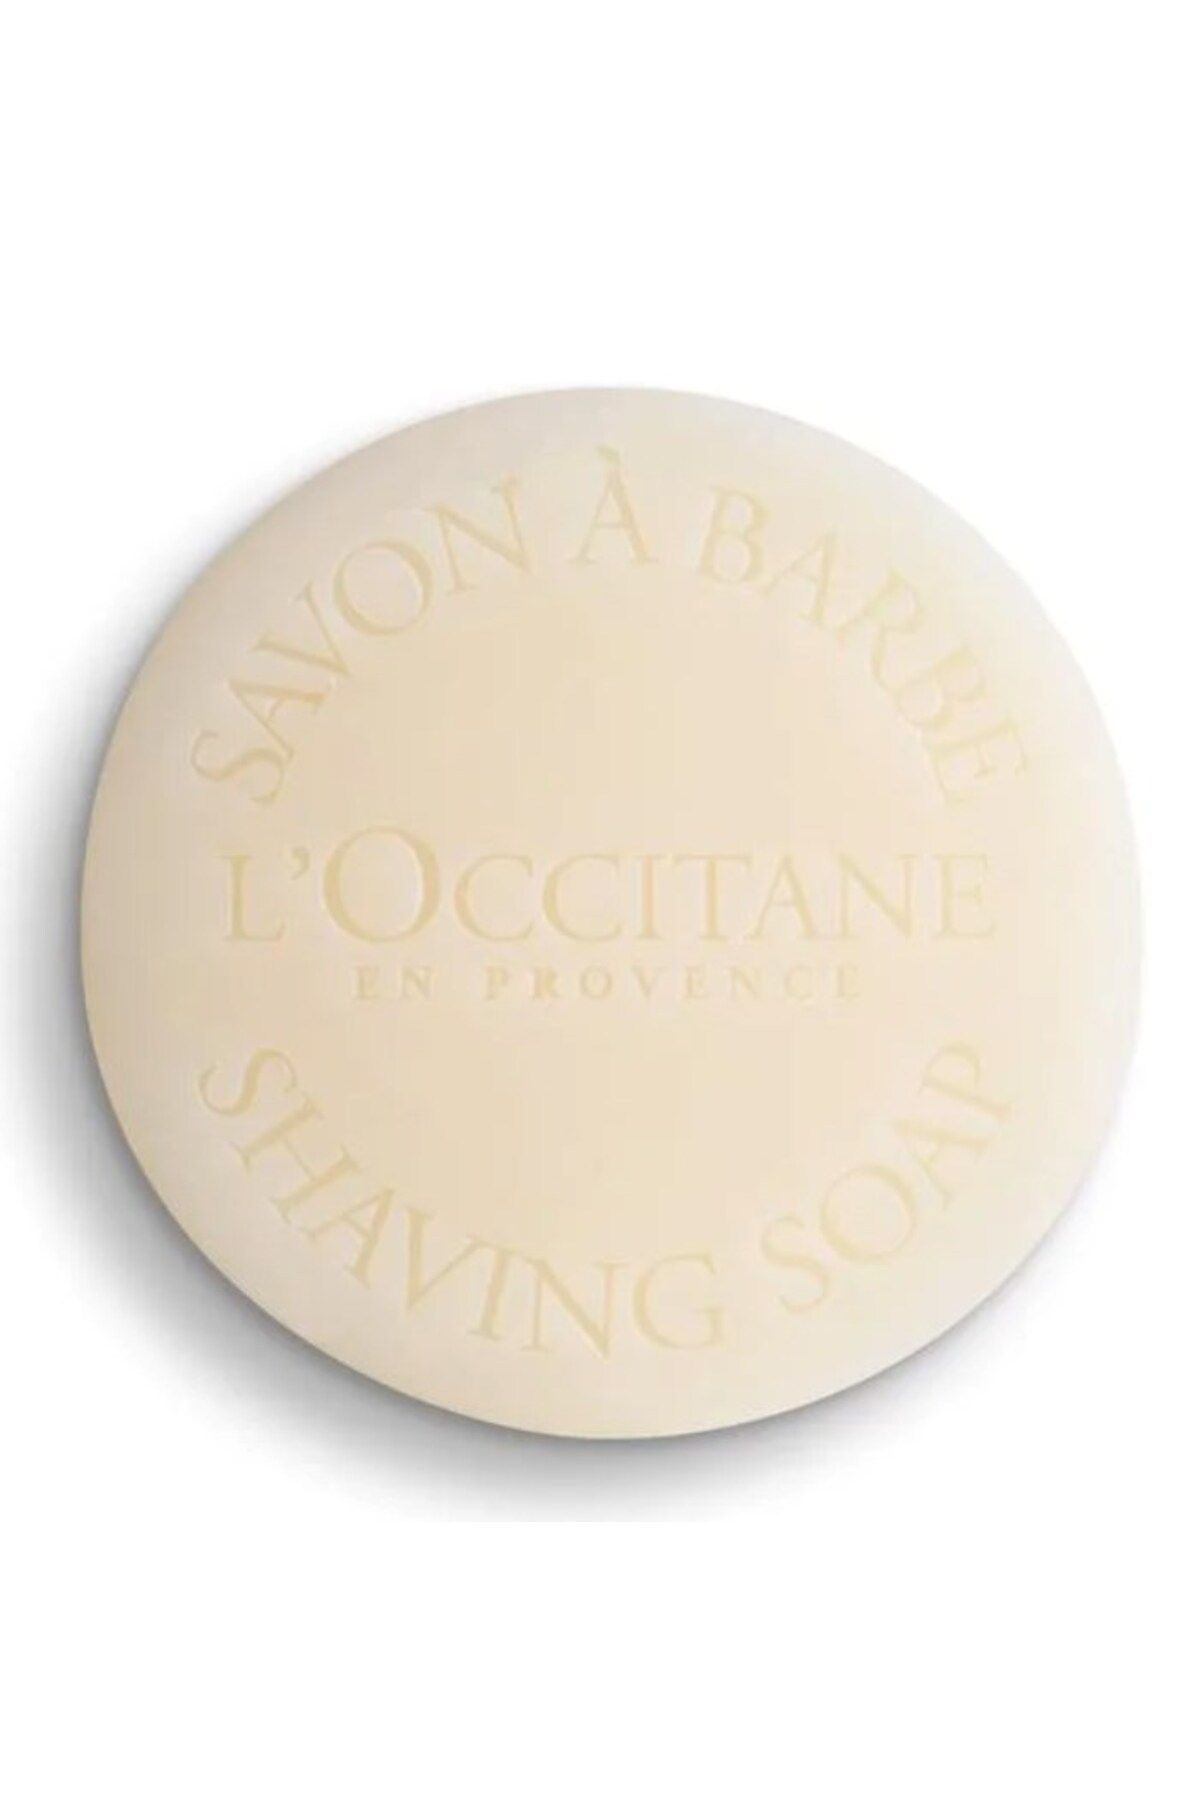 L'Occitane Cade Tıraş Sabunu 100 gr